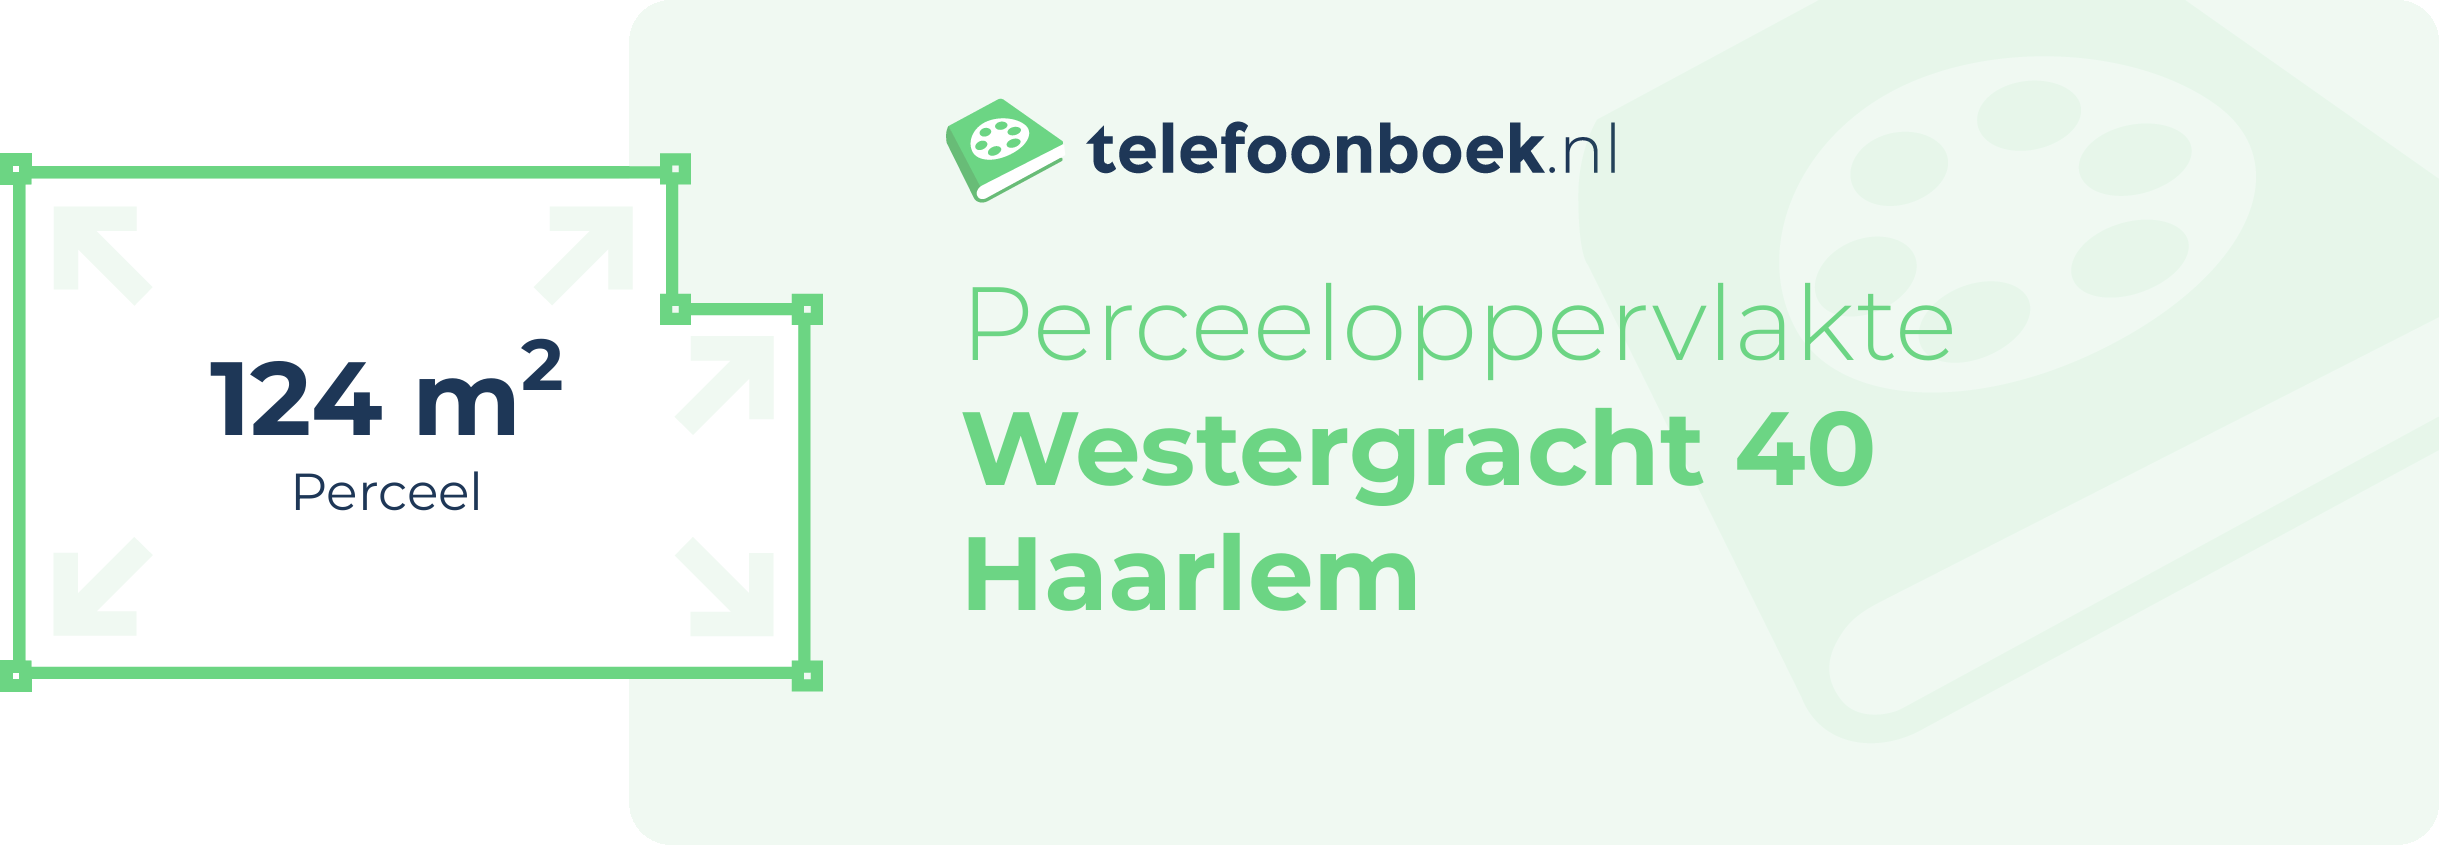 Perceeloppervlakte Westergracht 40 Haarlem